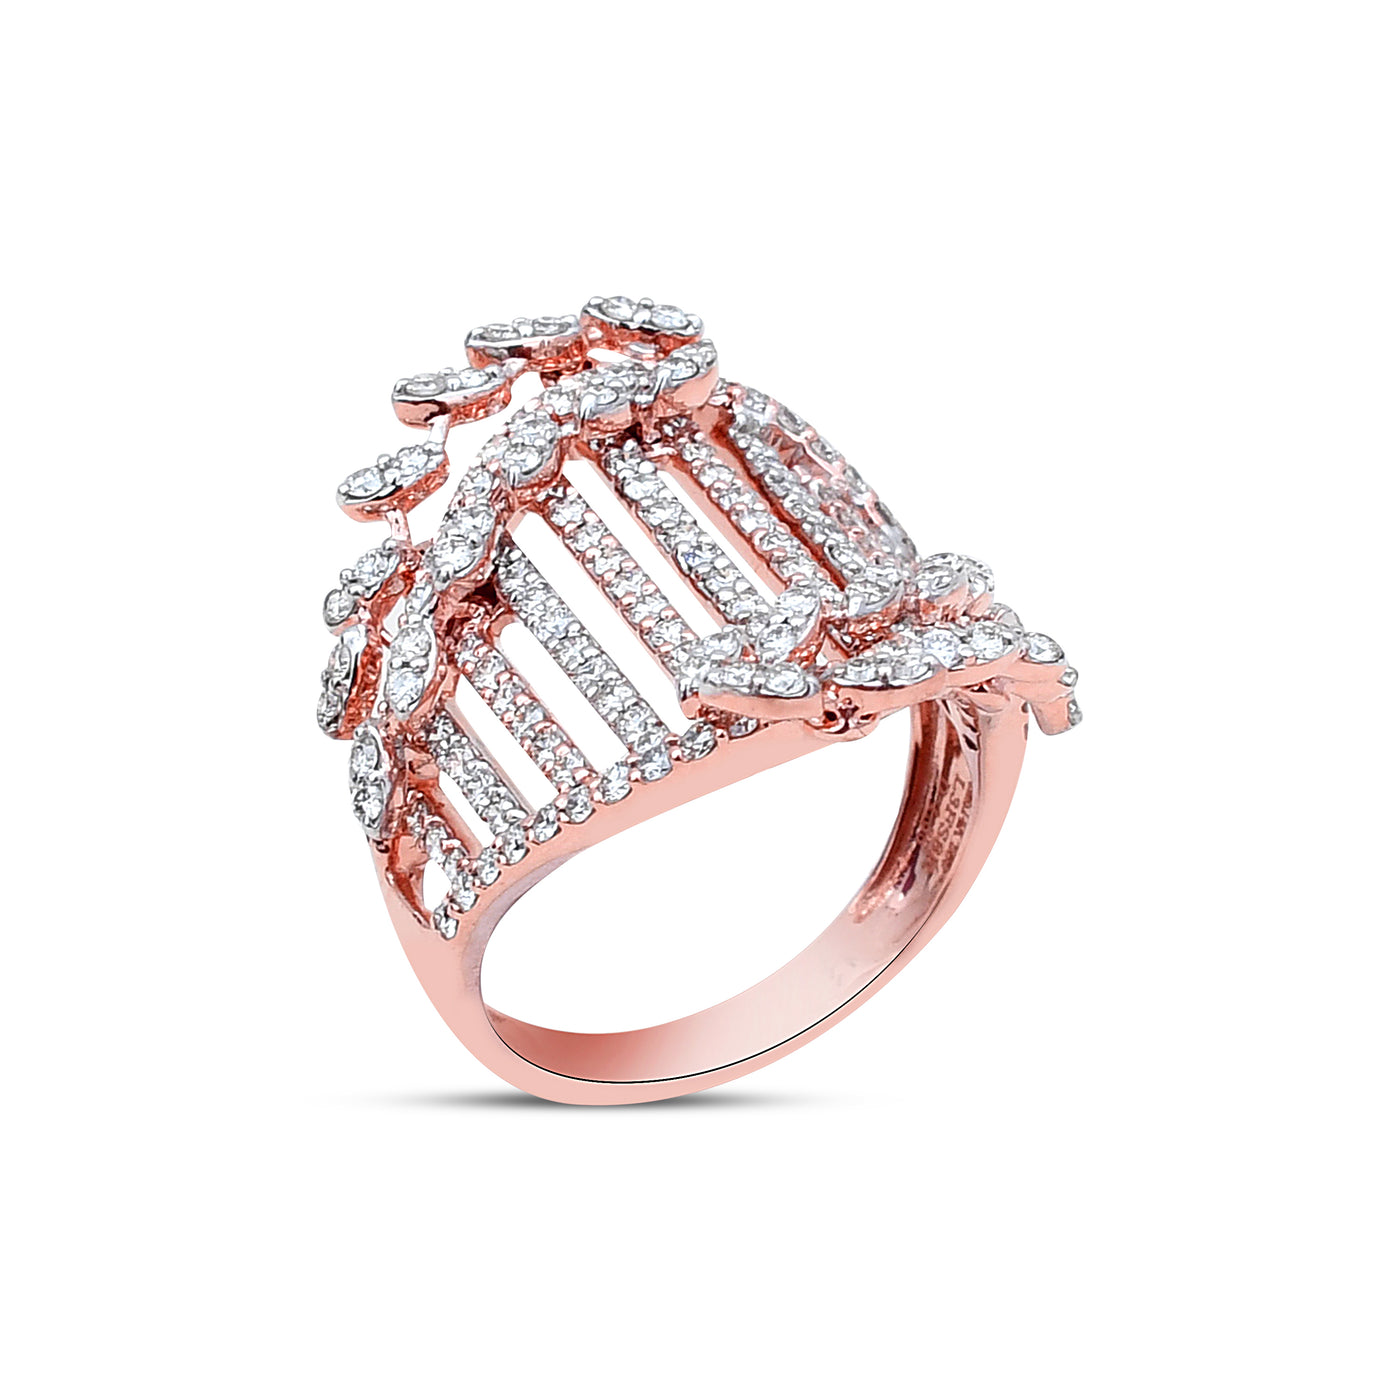 The Elizabeth Diamond Ring